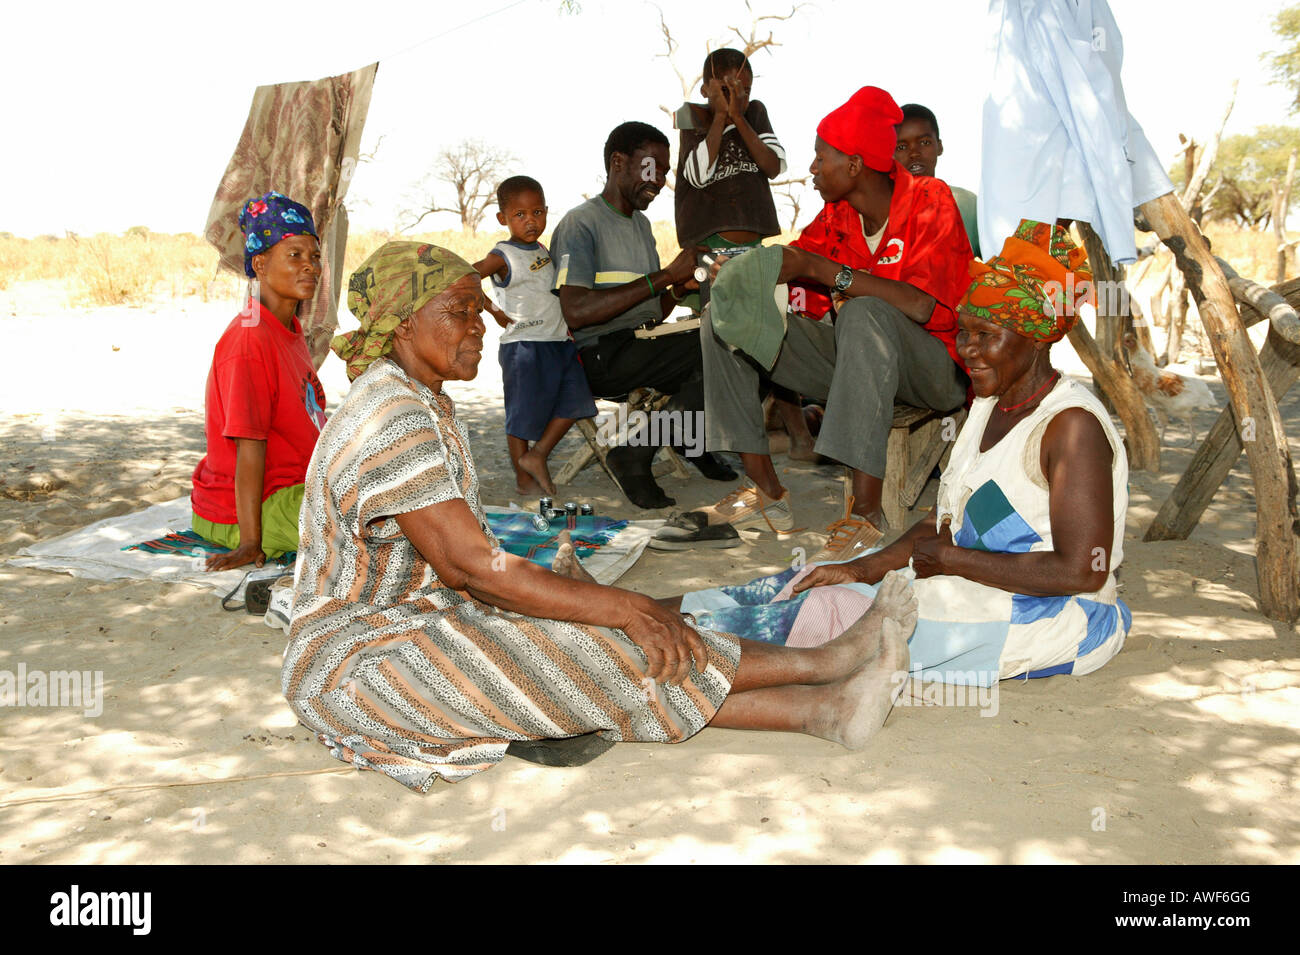 Village life in the shade of a tree, Sehitwa, Botswana, Africa Stock Photo